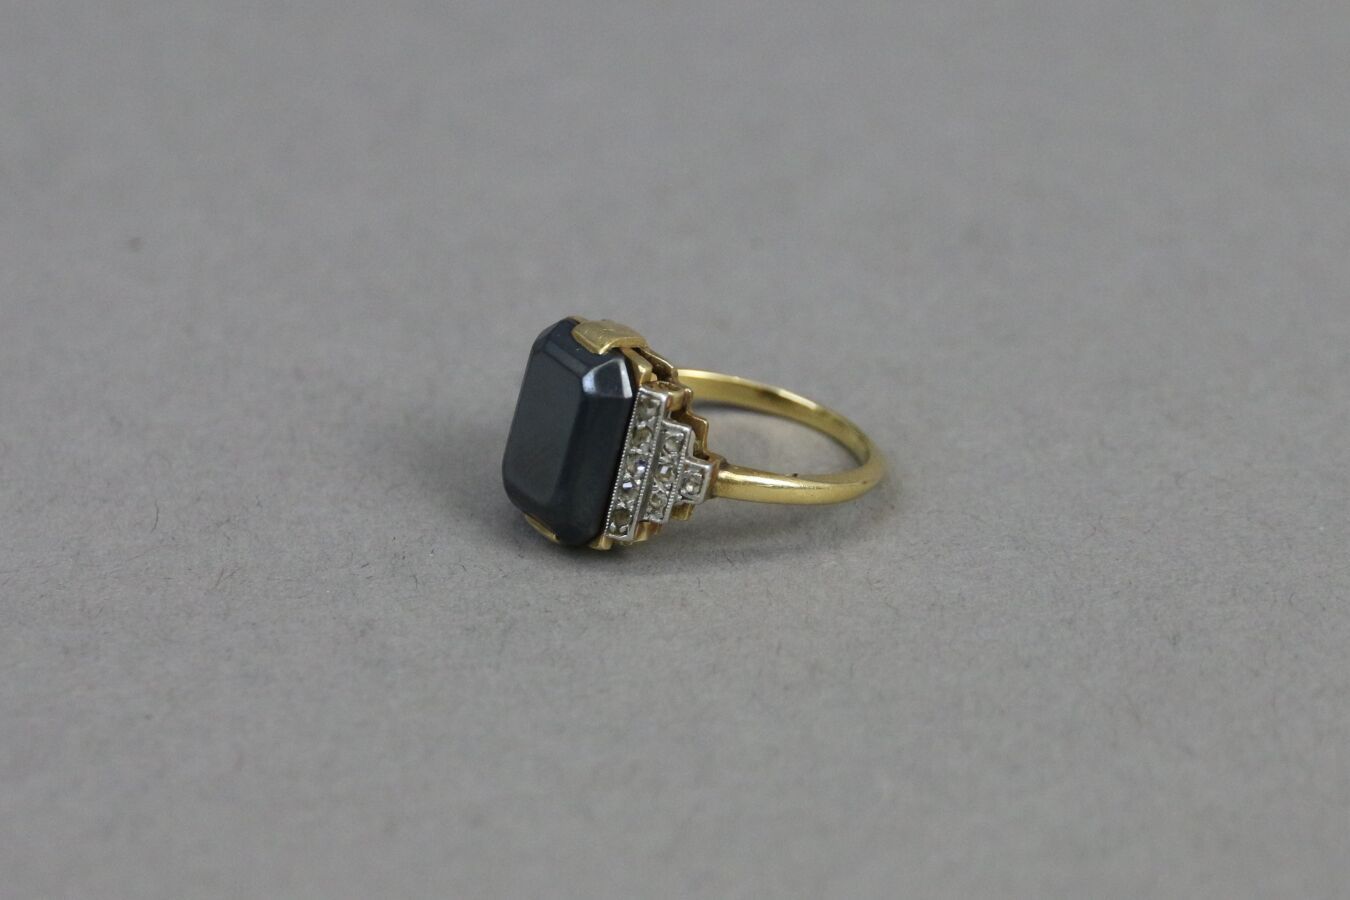 Null 黄金戒指，以长方形玛瑙为中心，镶嵌着层层叠叠的钻石玫瑰。

TDD: 57

毛重：5.4克